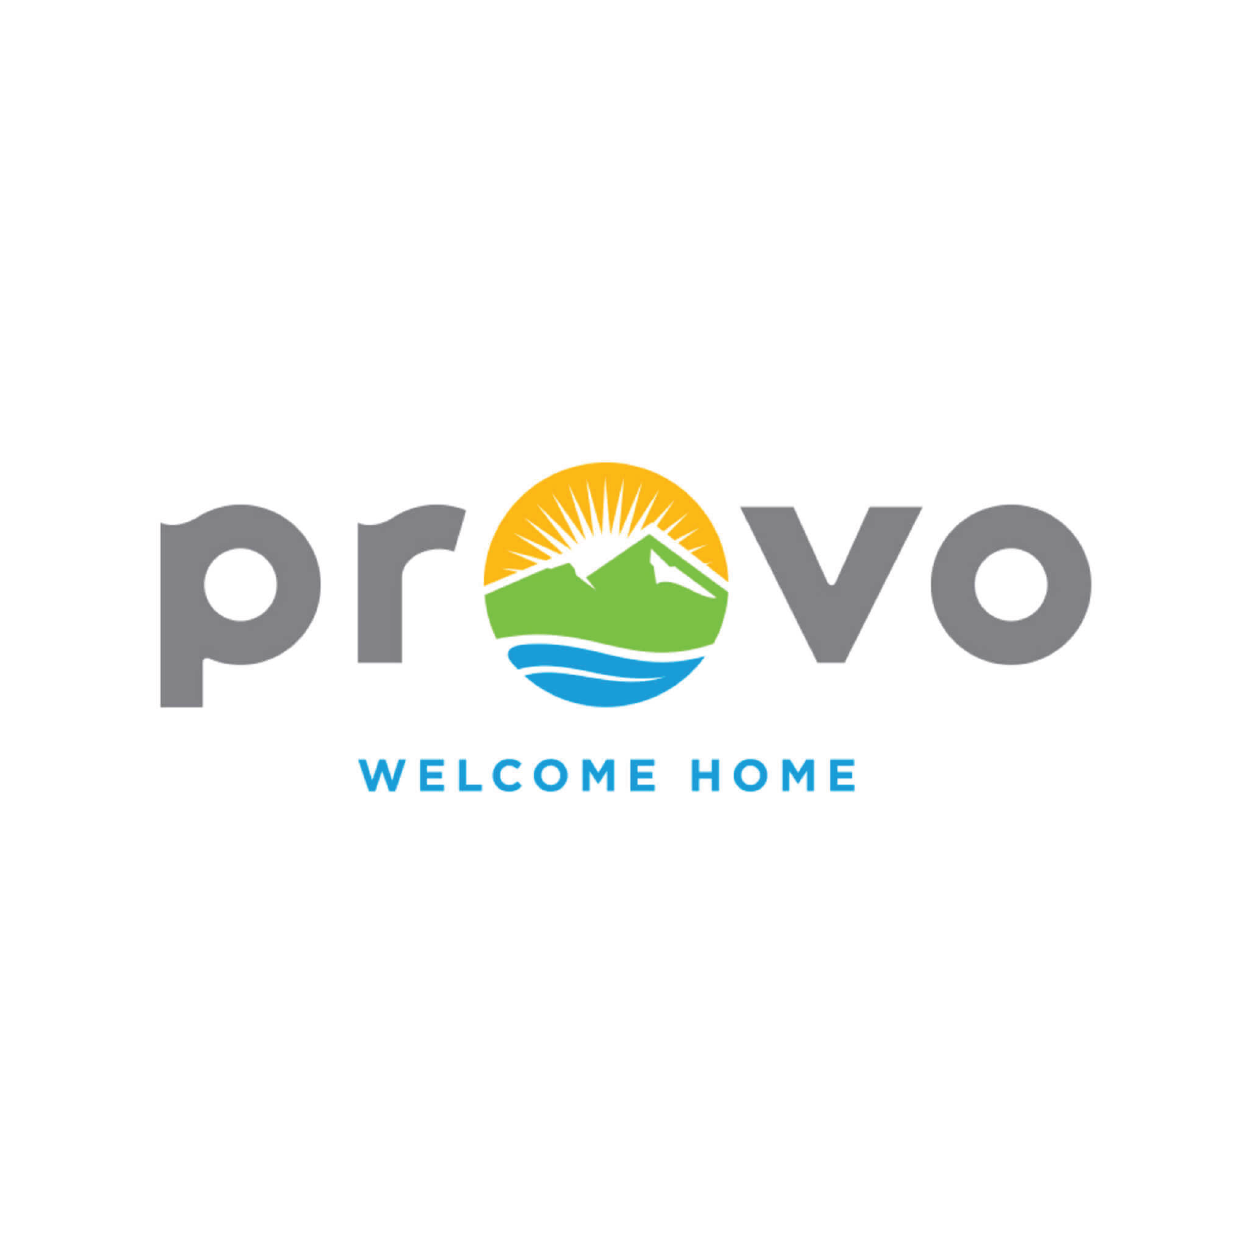 City of Provo Logo